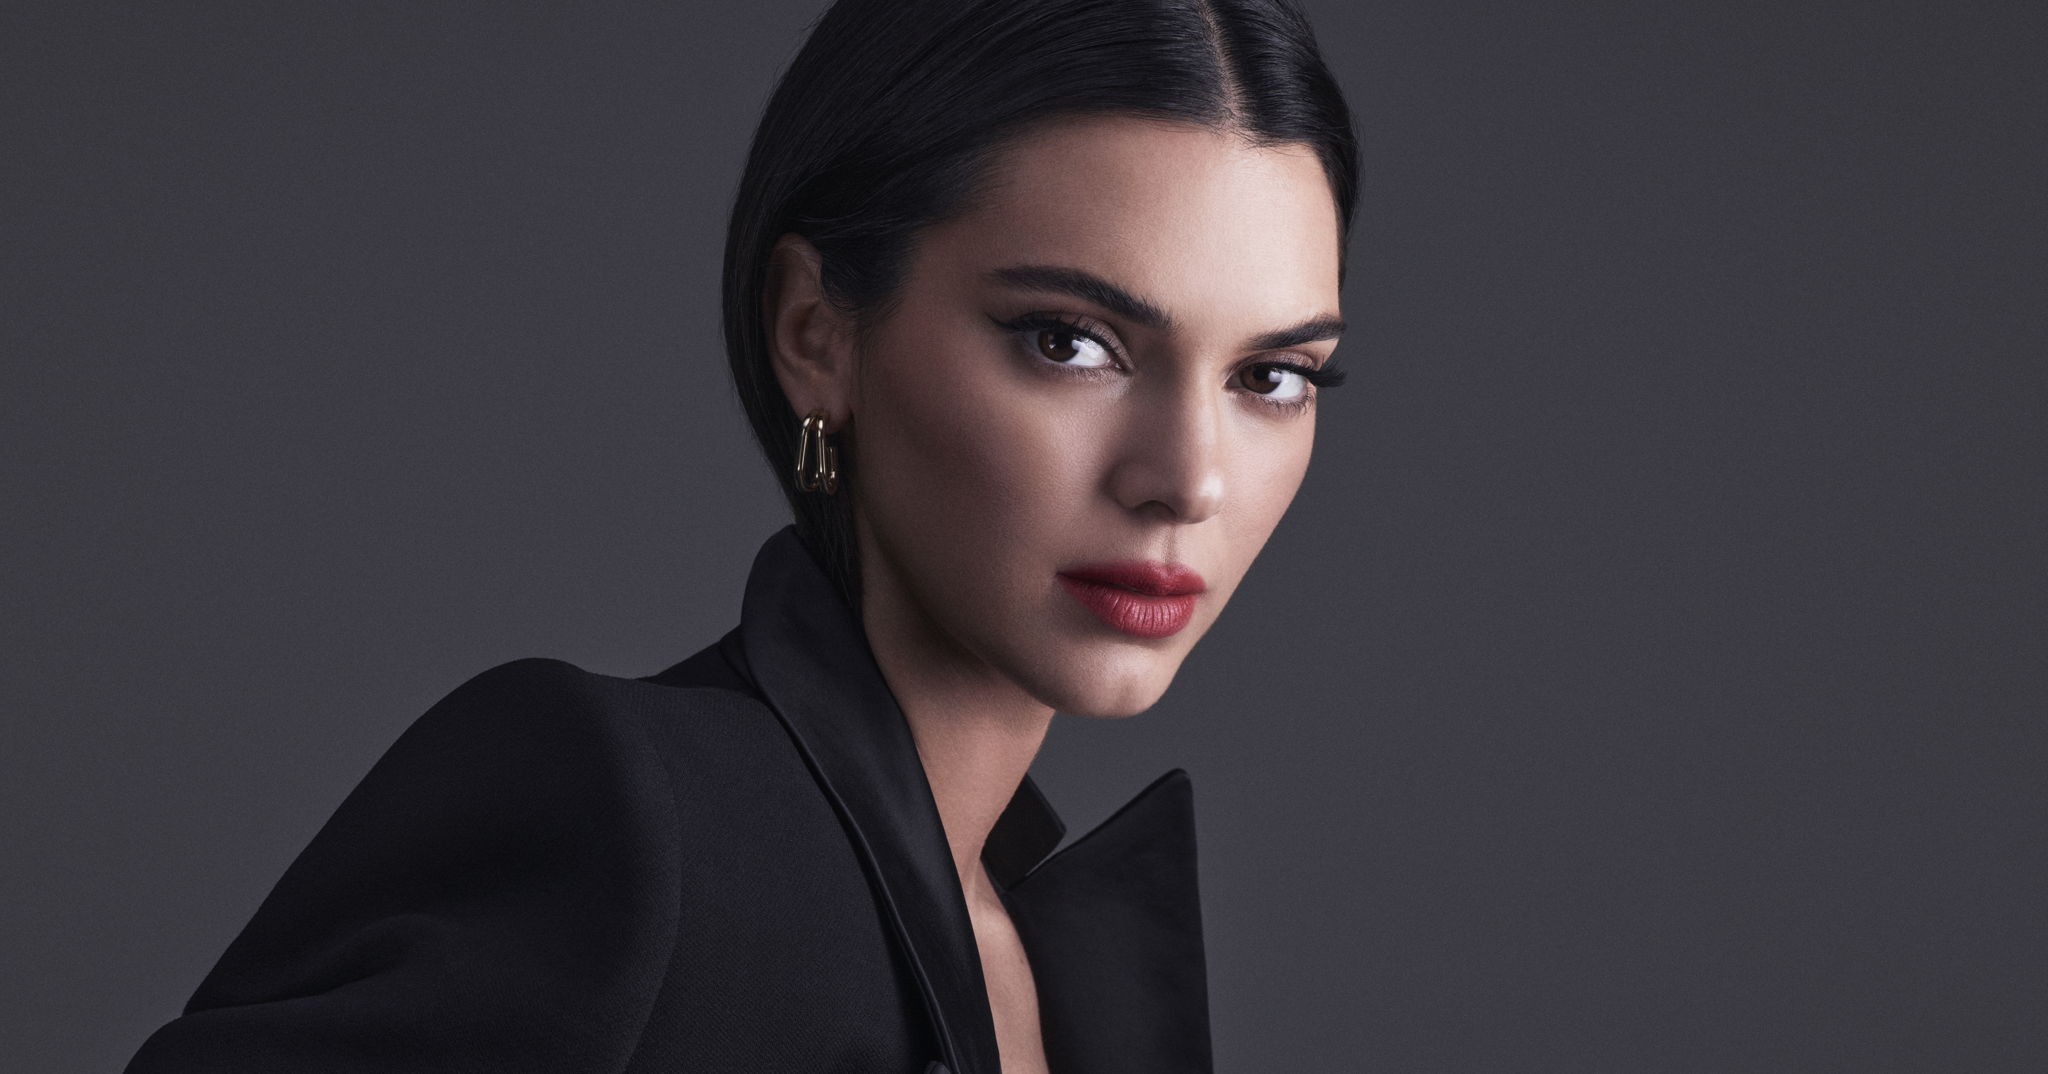 L'Oréal Paris kondigt Kendall Jenner aan als nieuwe wereldwijde ambassadrice